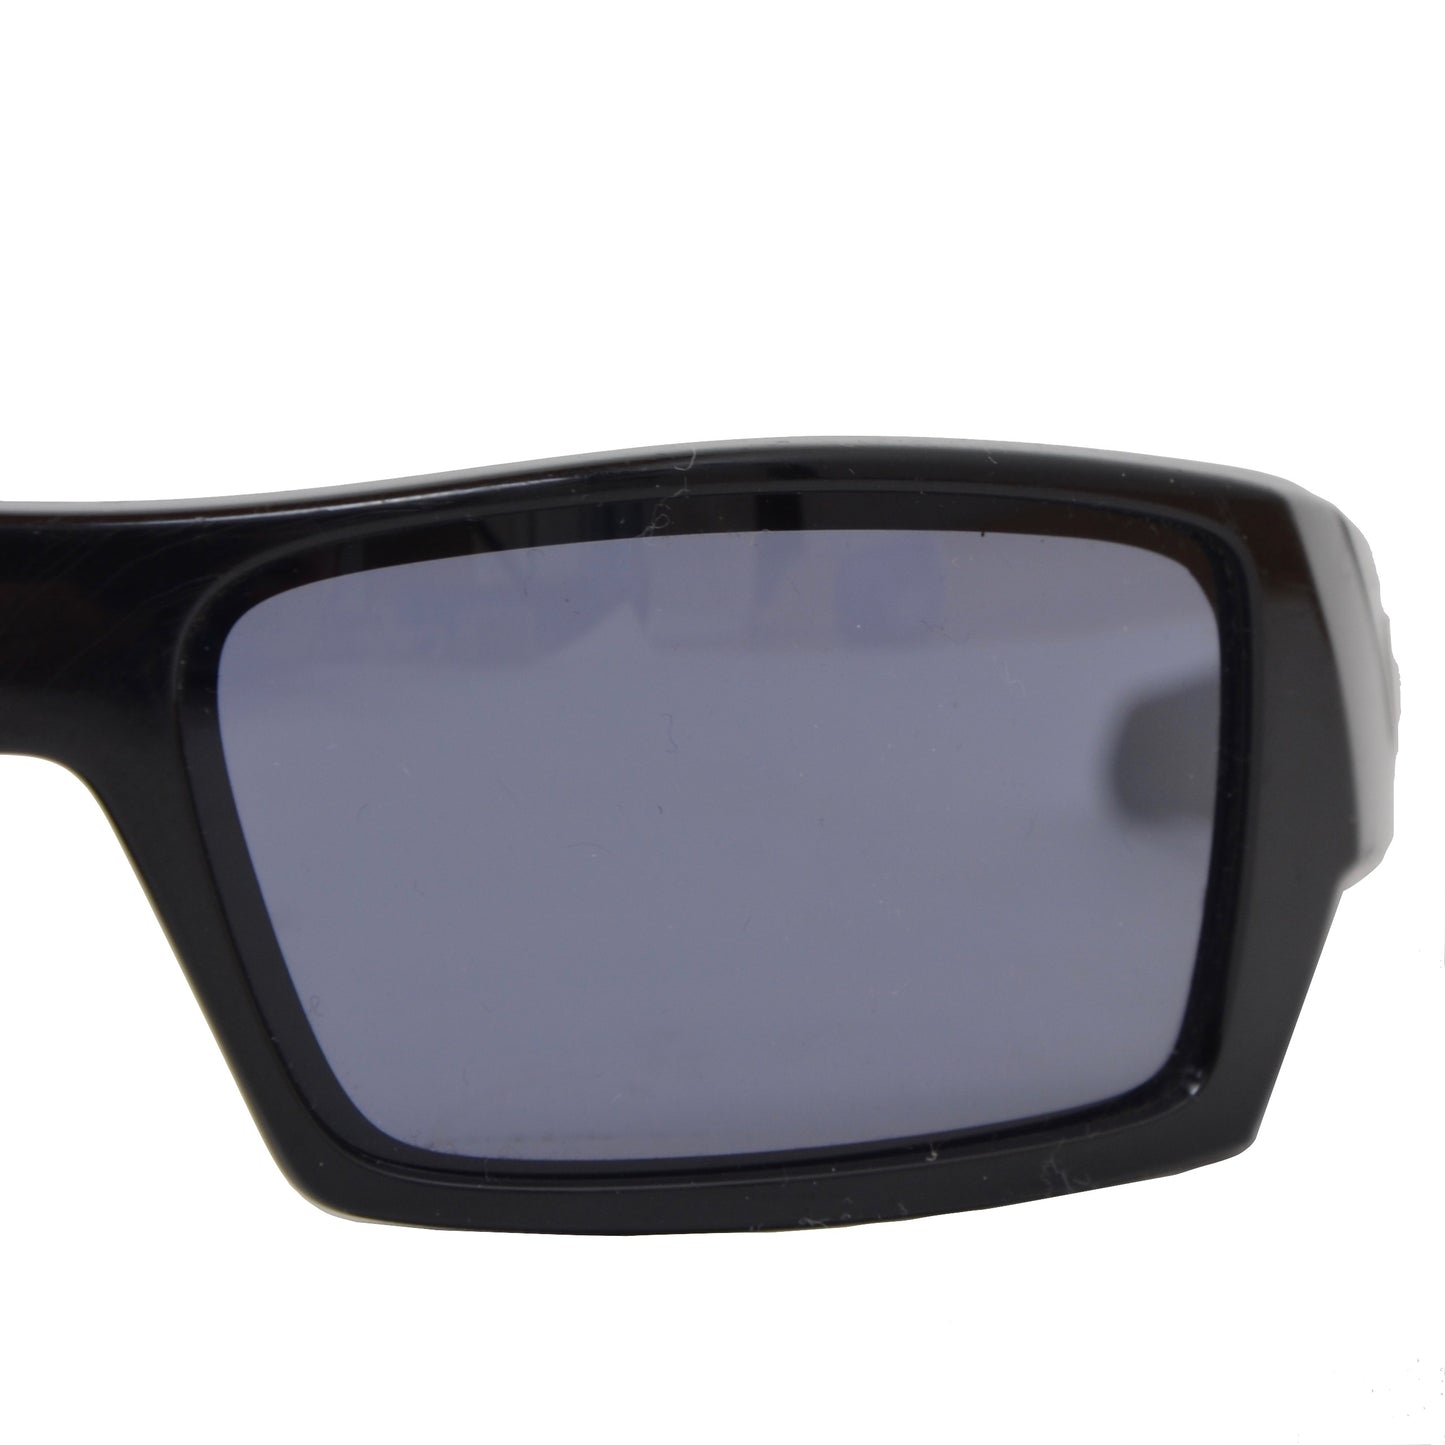 Oakley Gascan 03-471 Sunglasses - Black